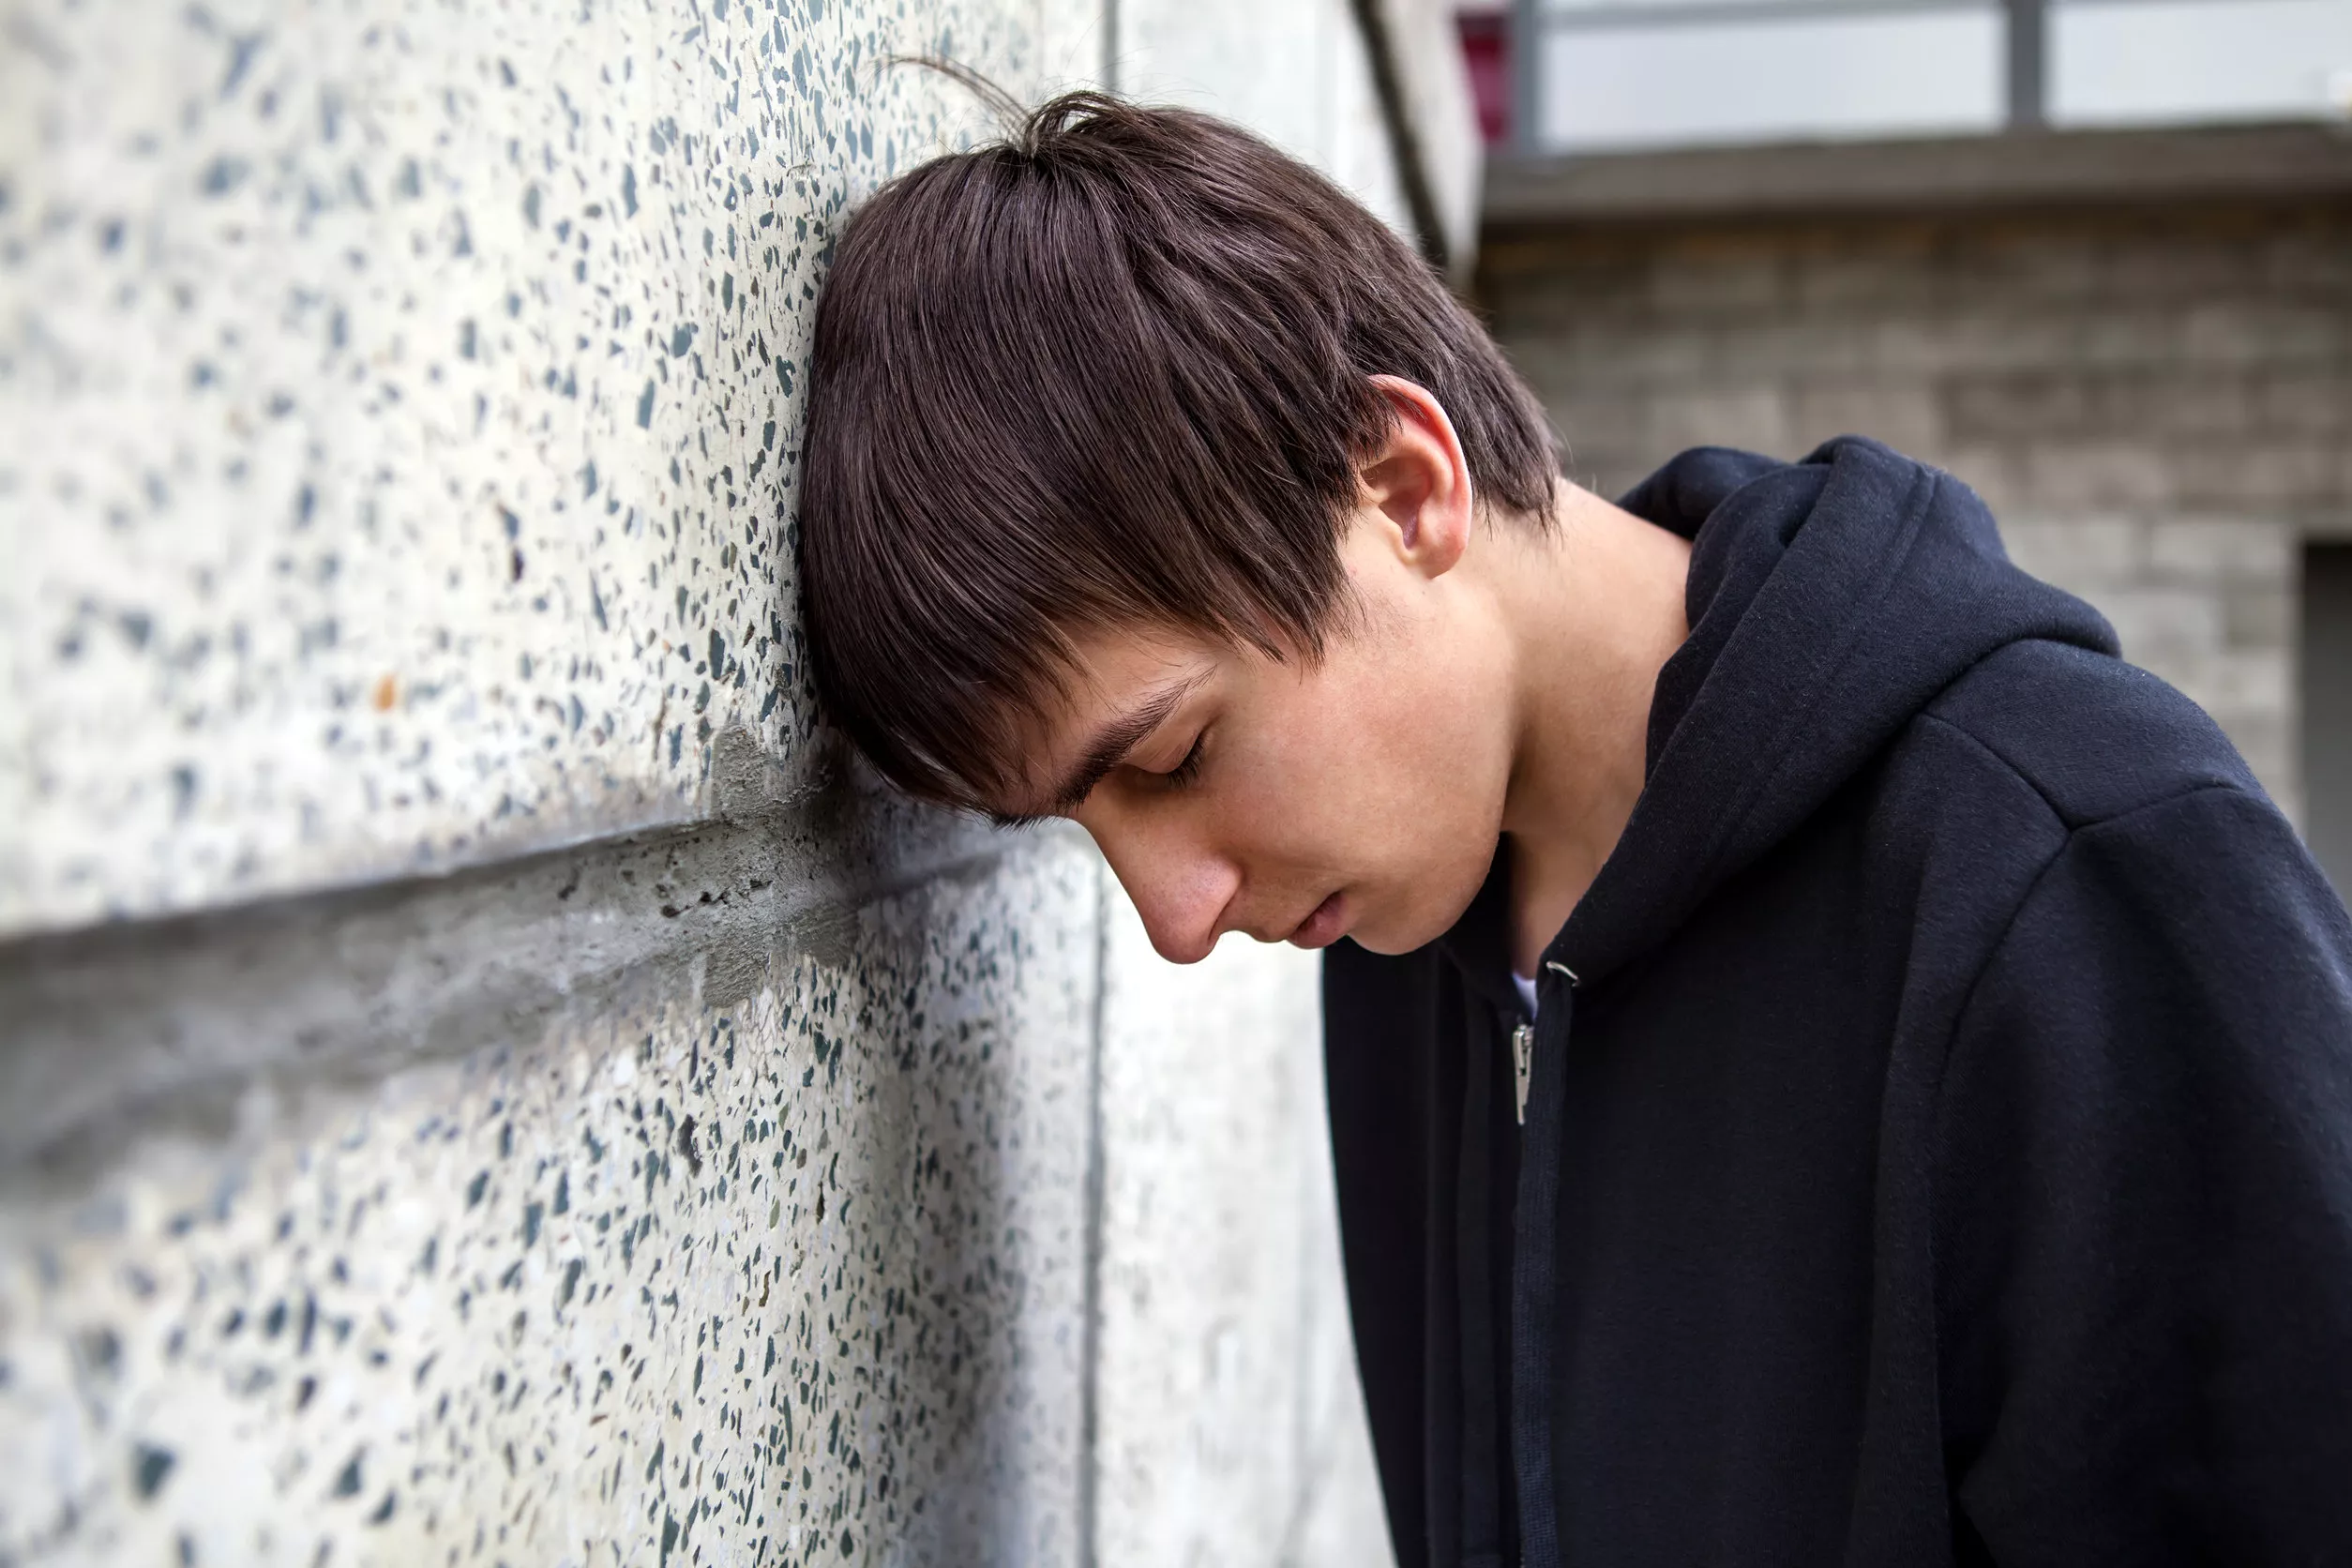 Why Do Teens Abuse Pills?